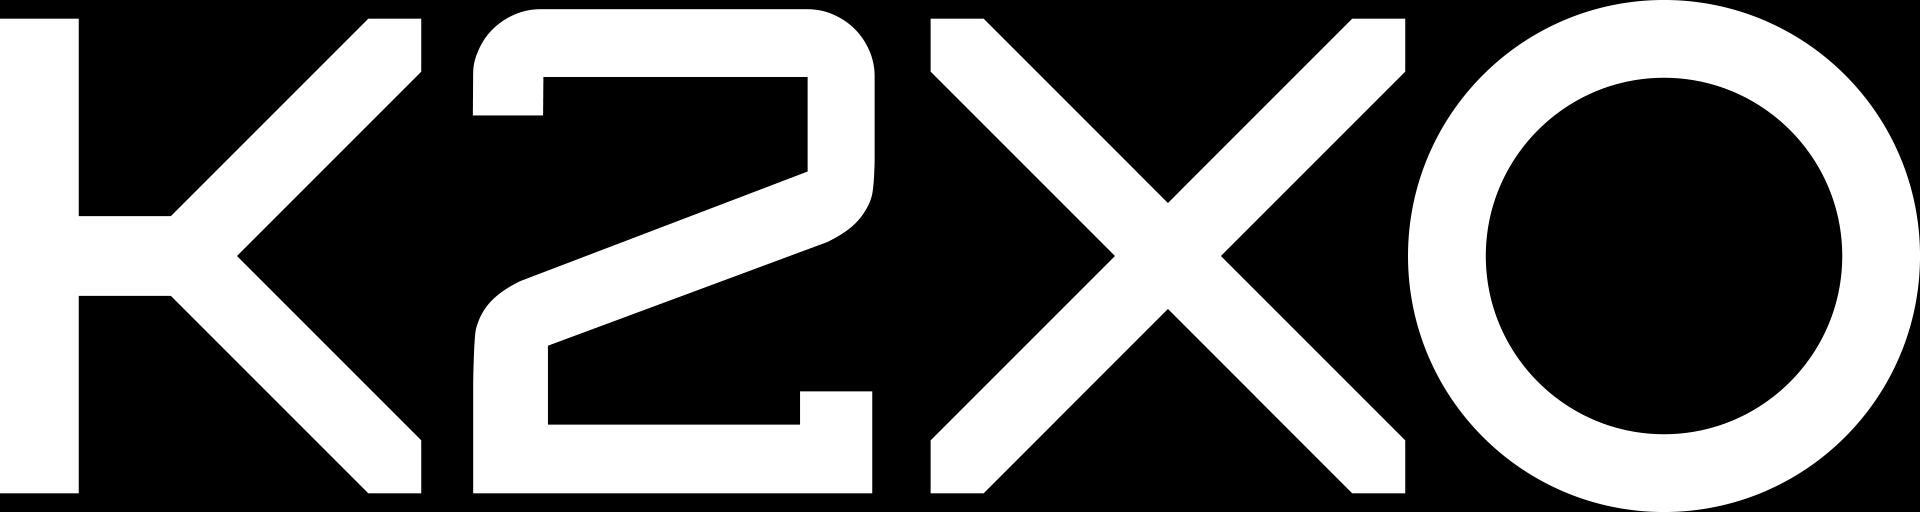 K2XO primary logo on black